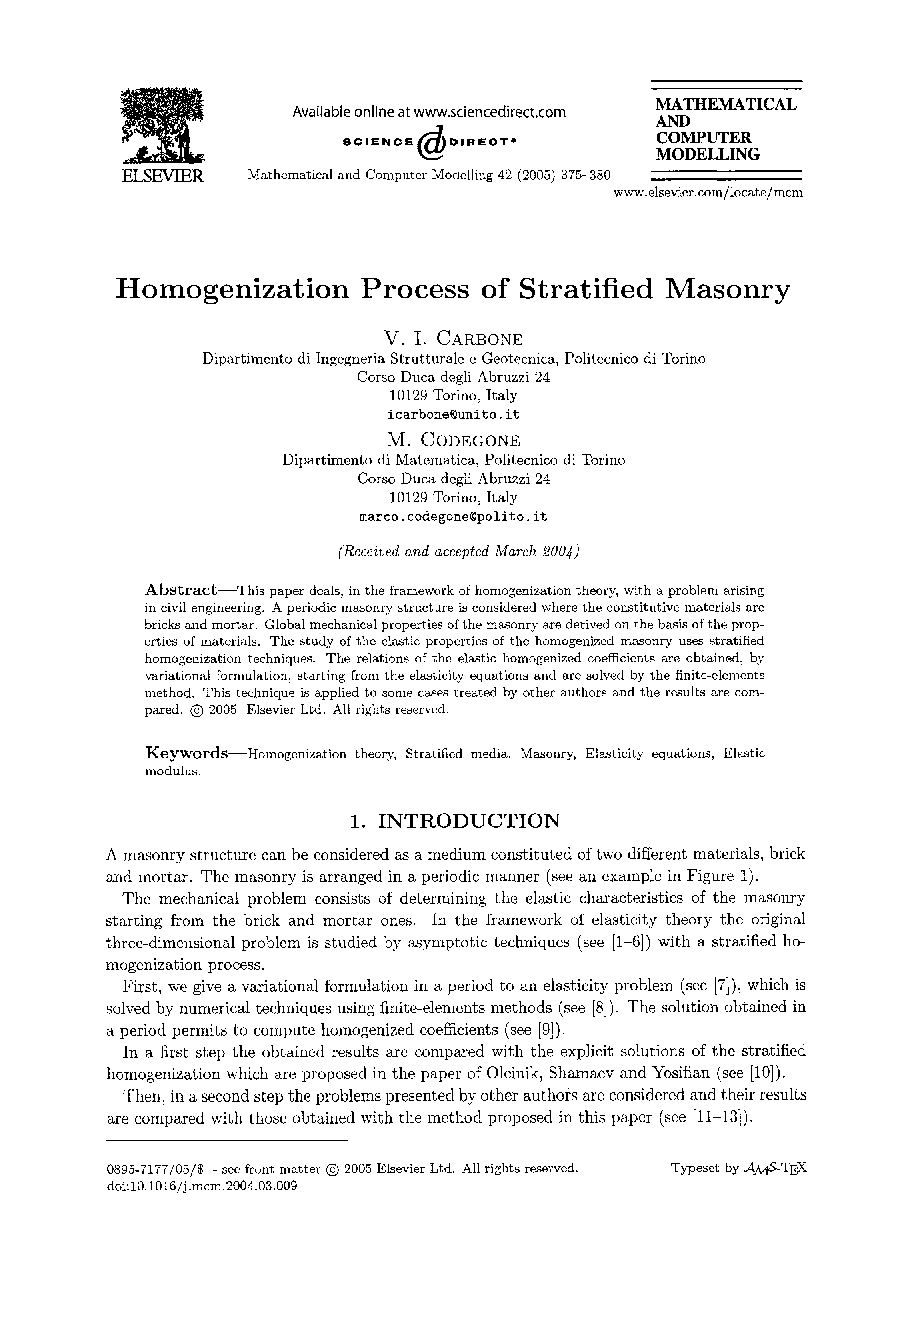 Homogenization process of stratified masonry